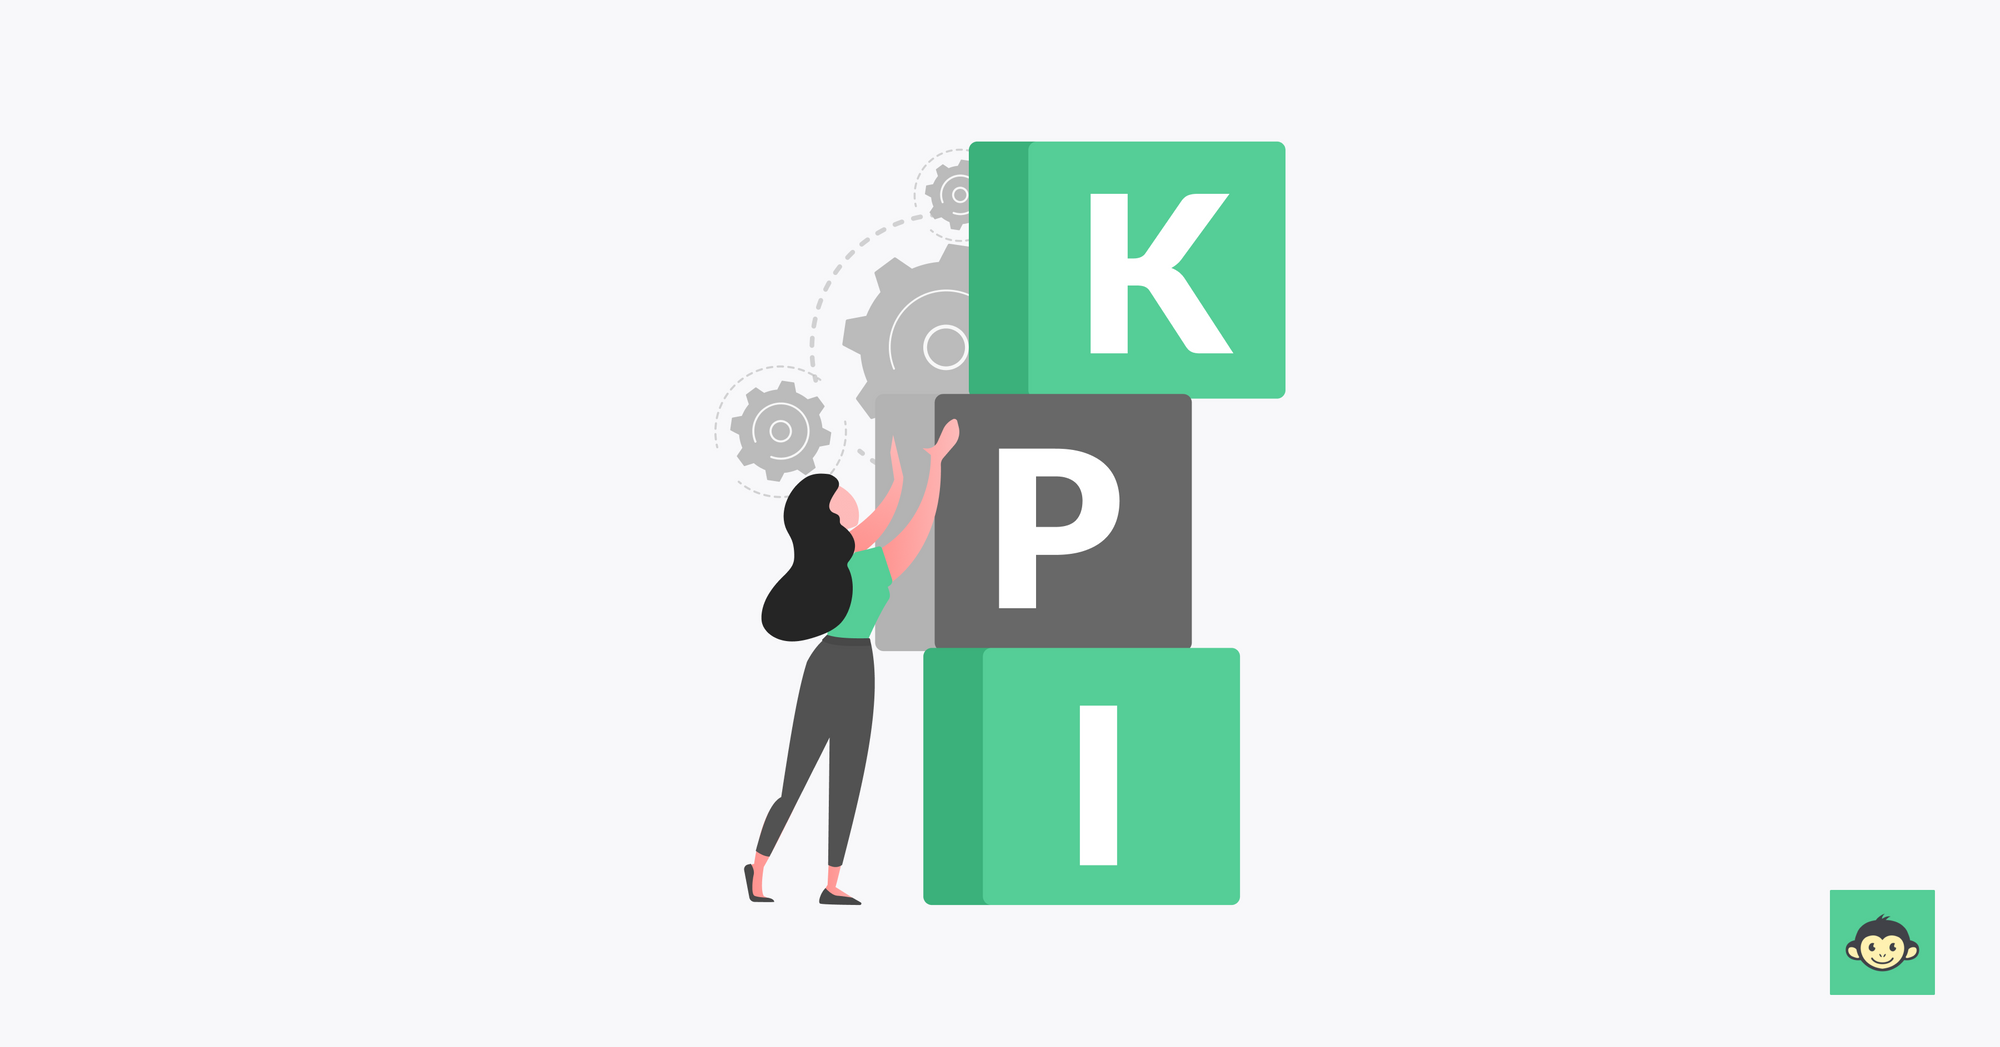 Employer building block that spells KPI